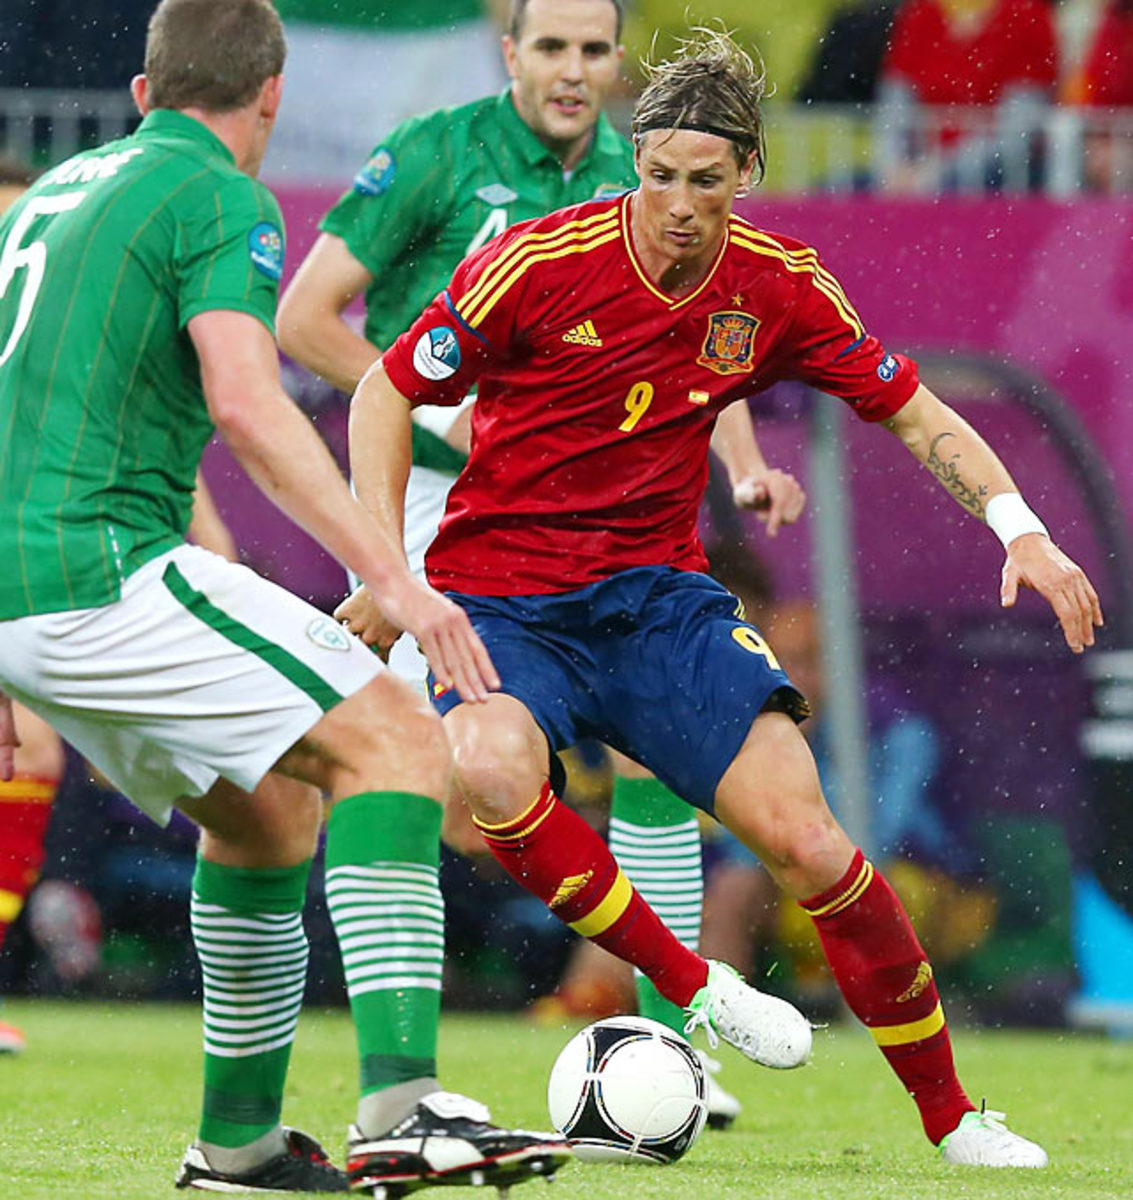 Spain-Ireland (4-0)